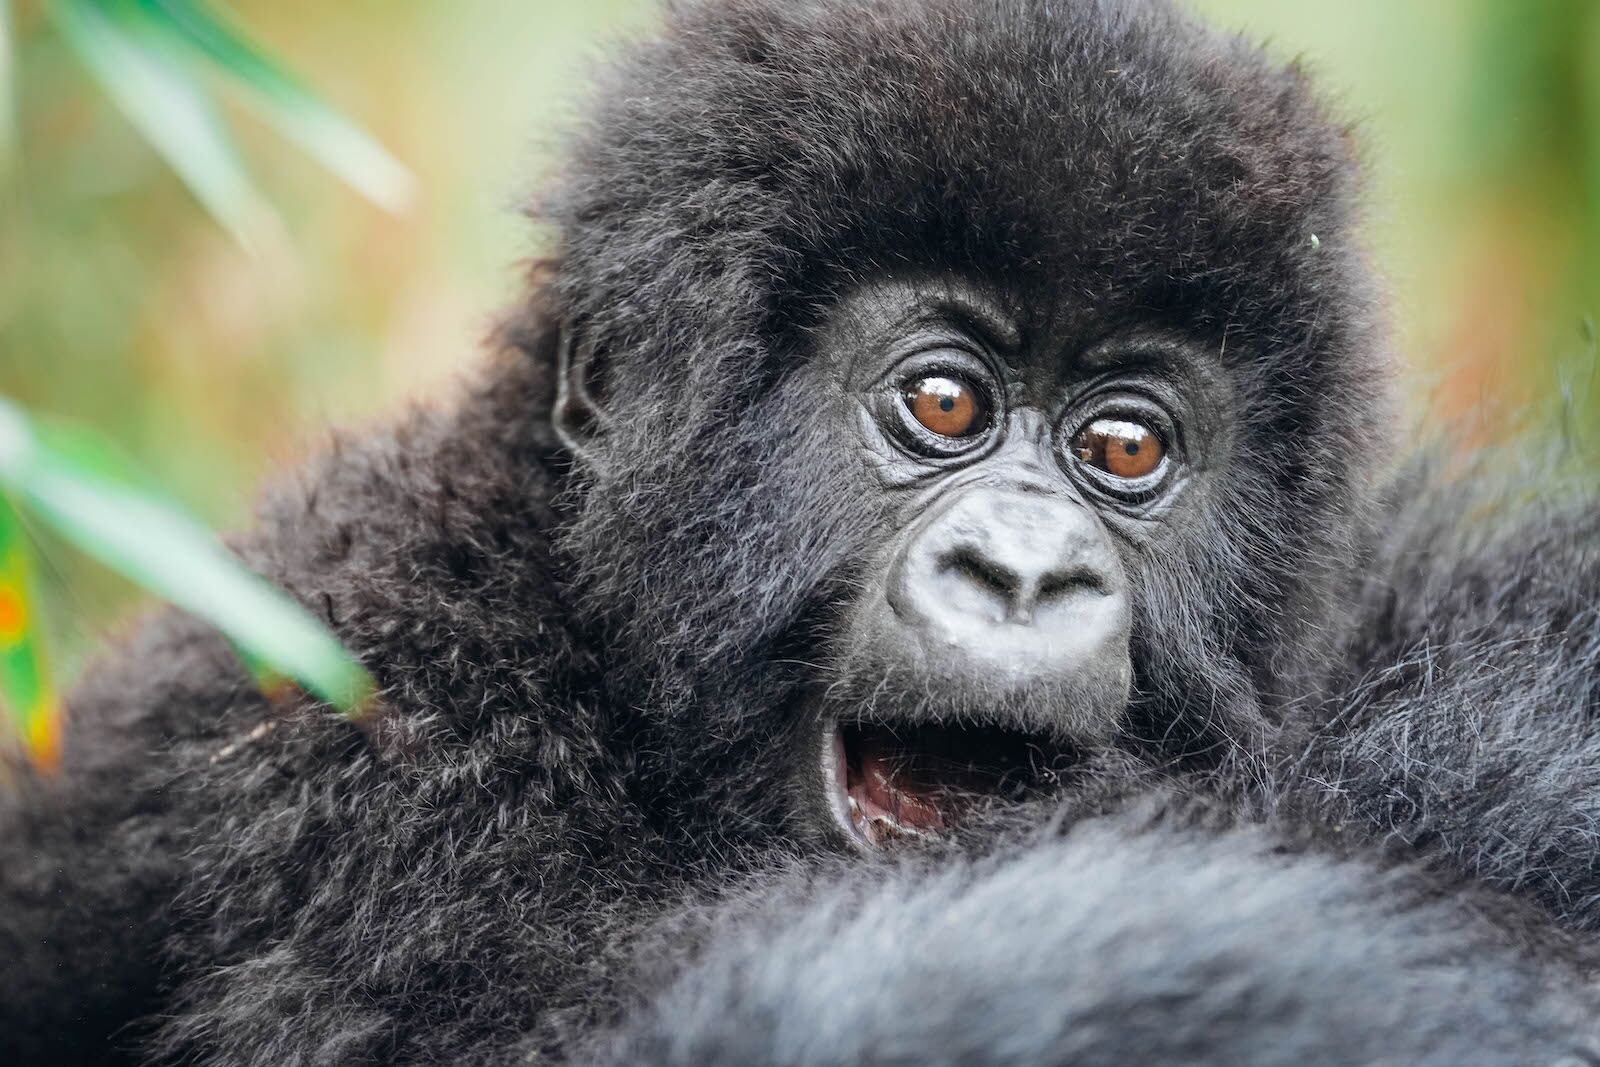 best country for safari - rwanda gorilla child